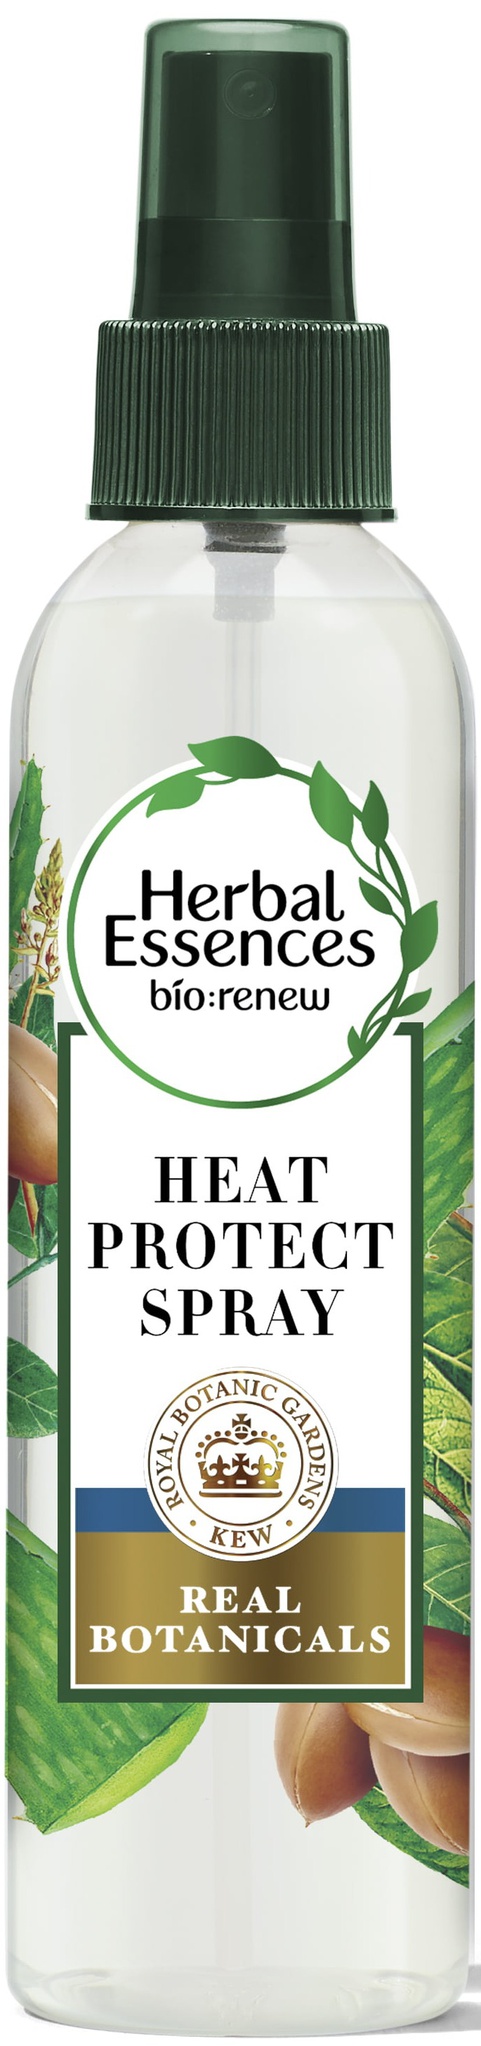 Herbal Essences Argan Oil & Aloe Sulfate-free Heat Protect Spray